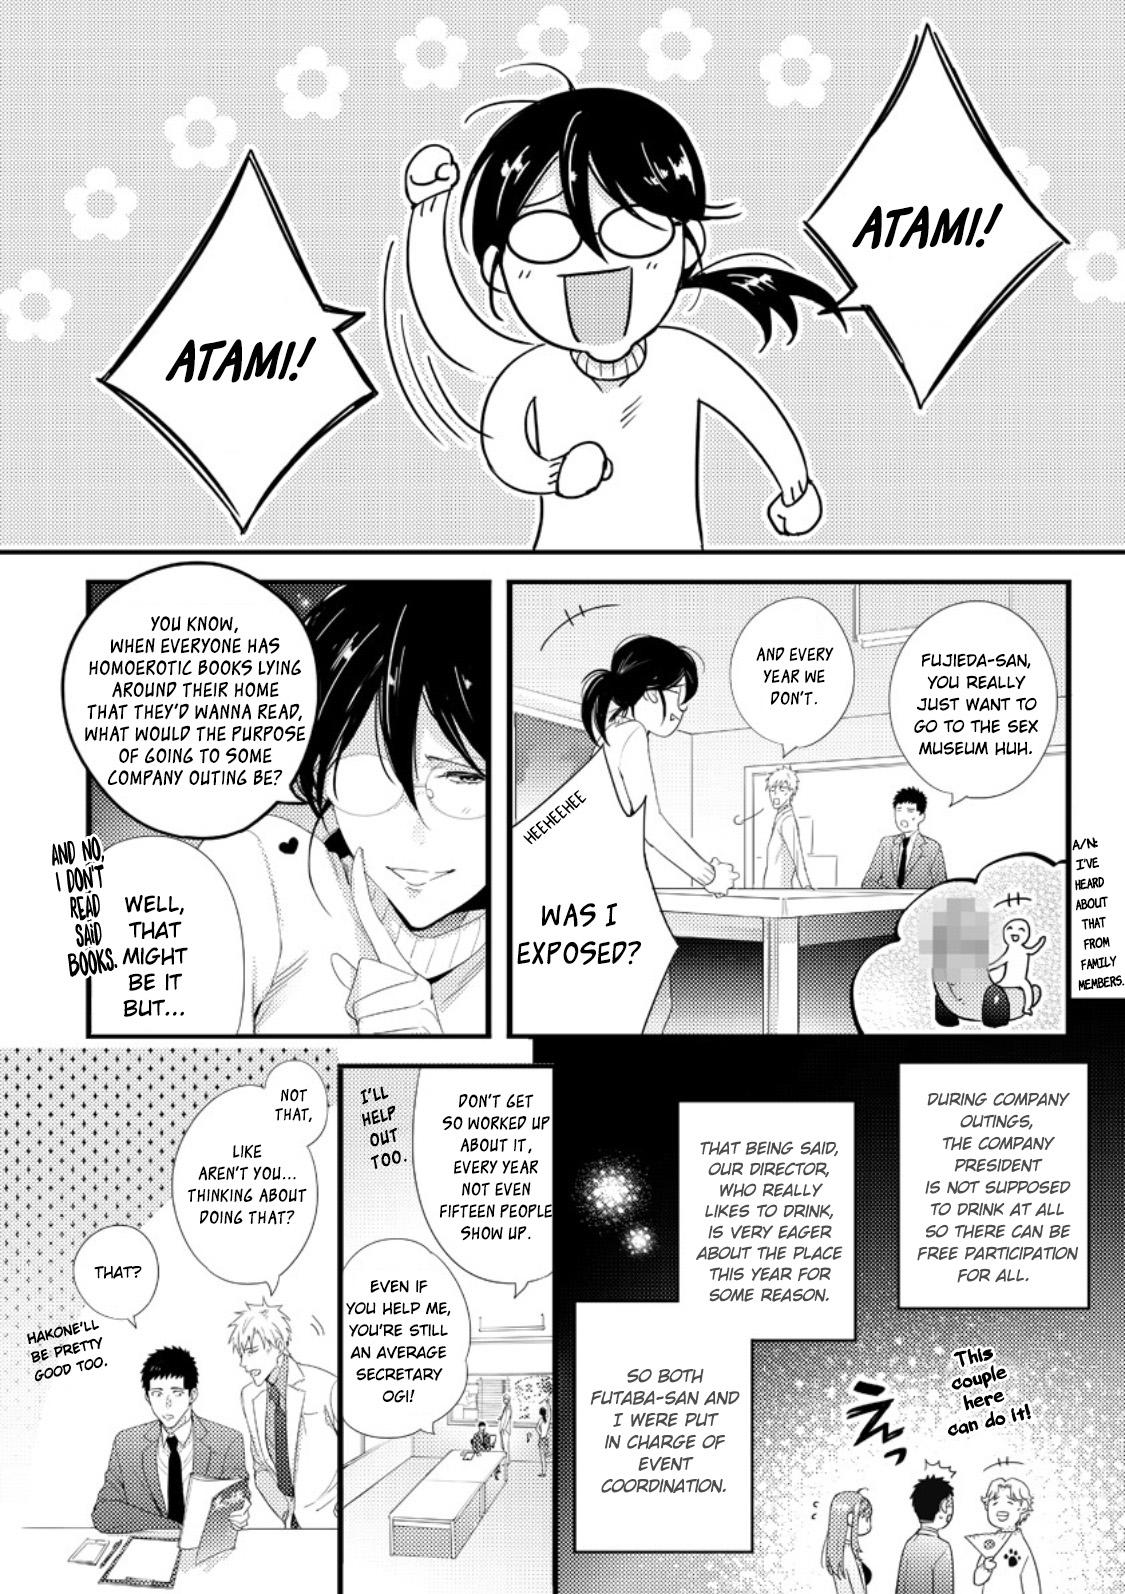 4some Please Let Me Hold You Futaba-san! 8teenxxx - Page 4